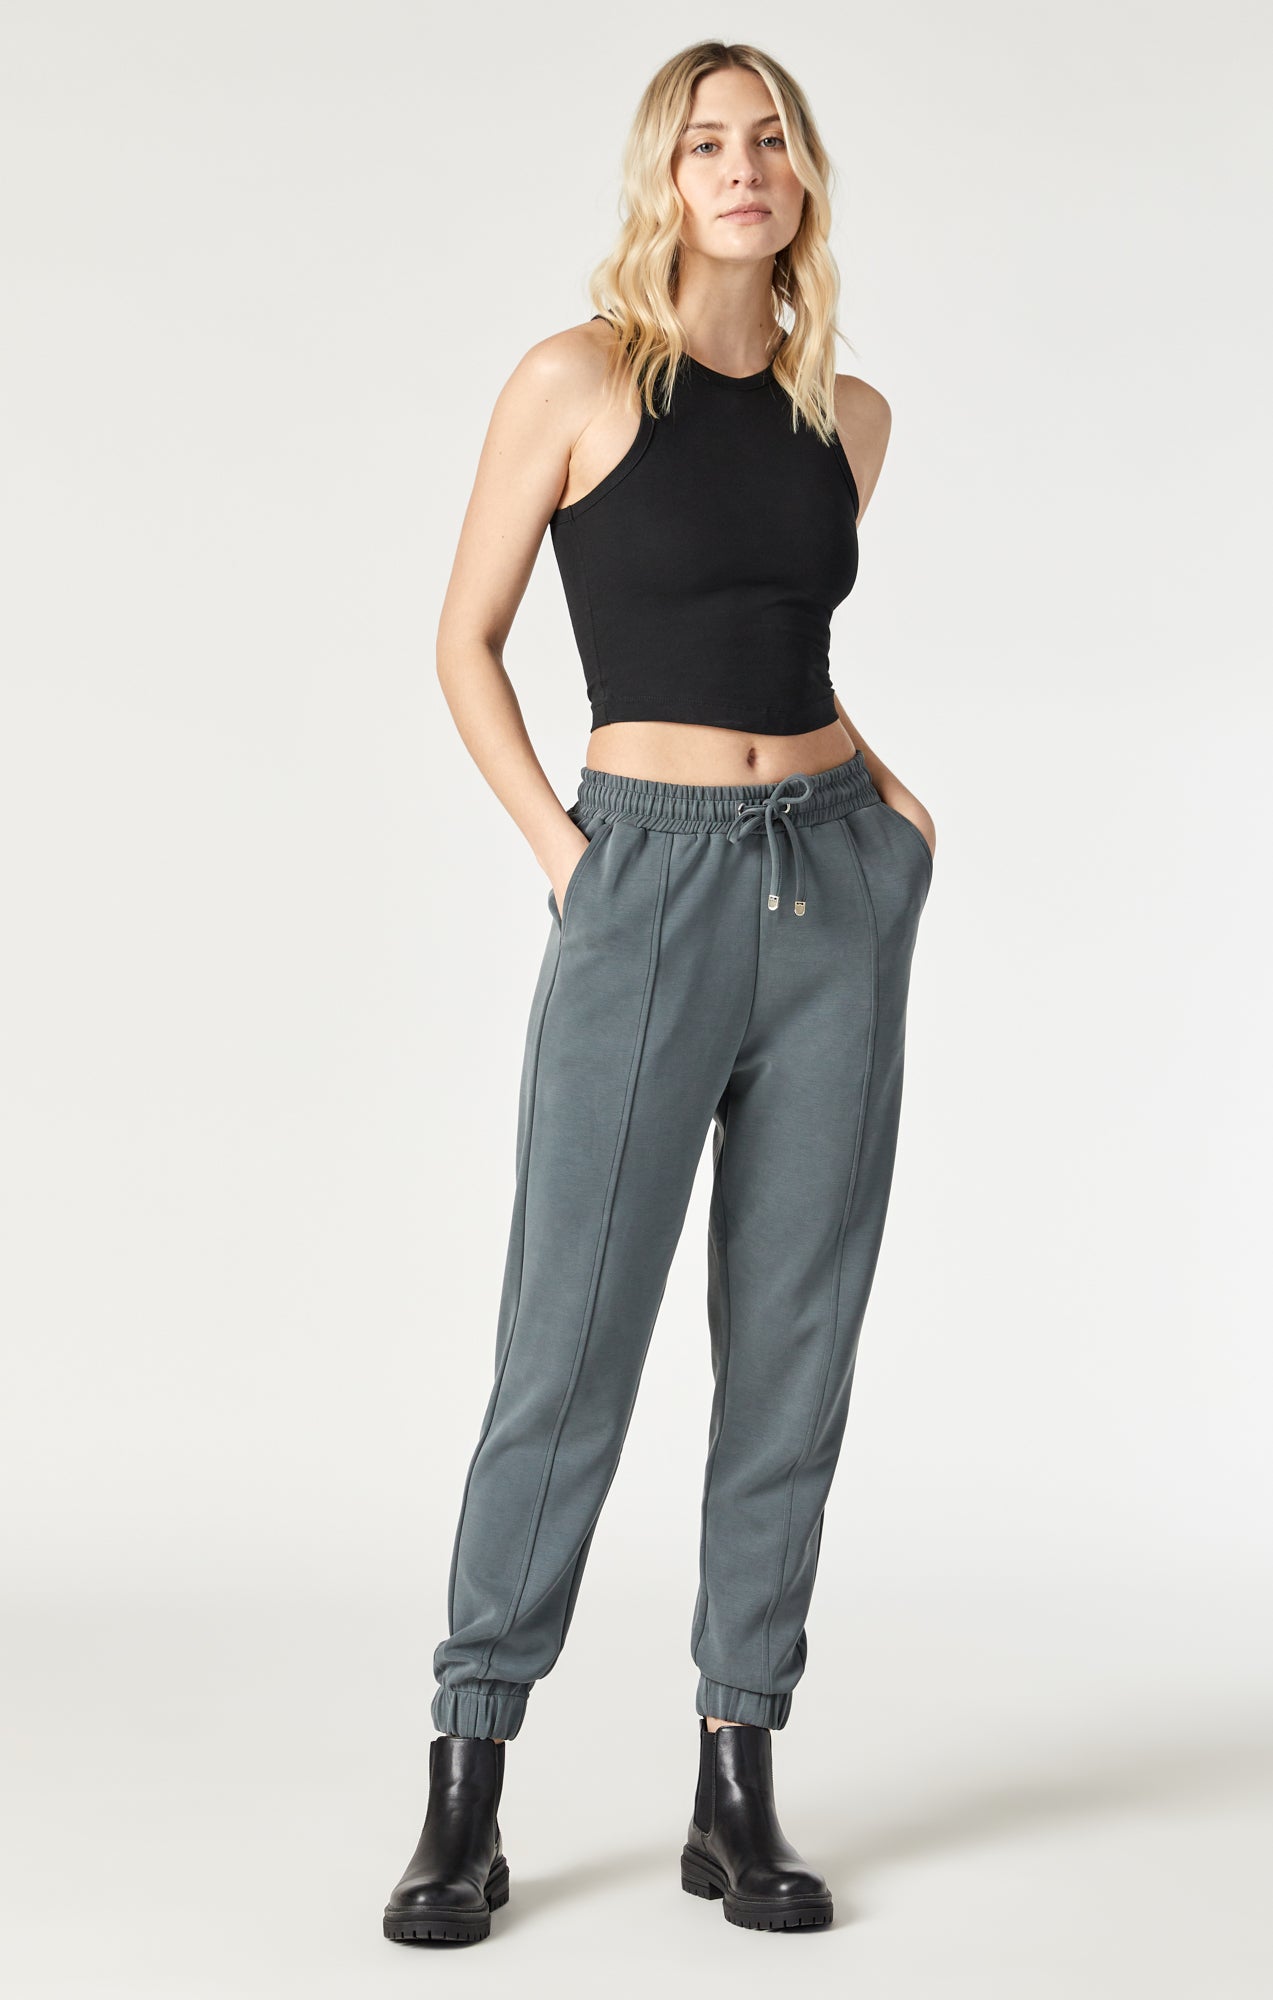 Silvertraq : Loungewear for women - Buy lounge tops, pants & shorts